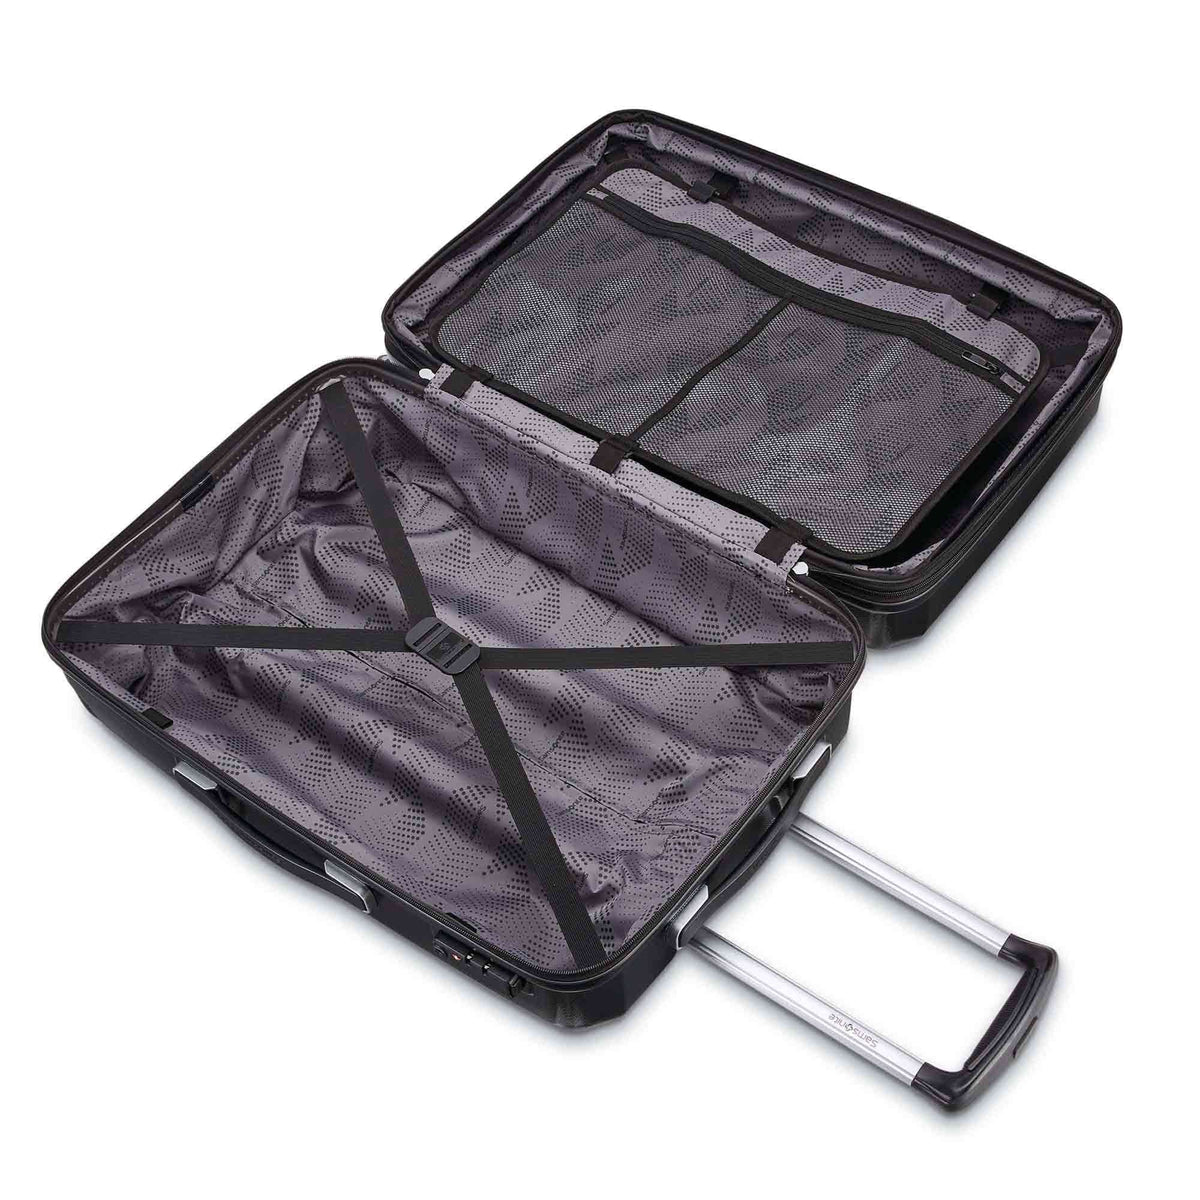 Samsonite Winfield 3 Deluxe 3 Piece Spinner Luggage Set